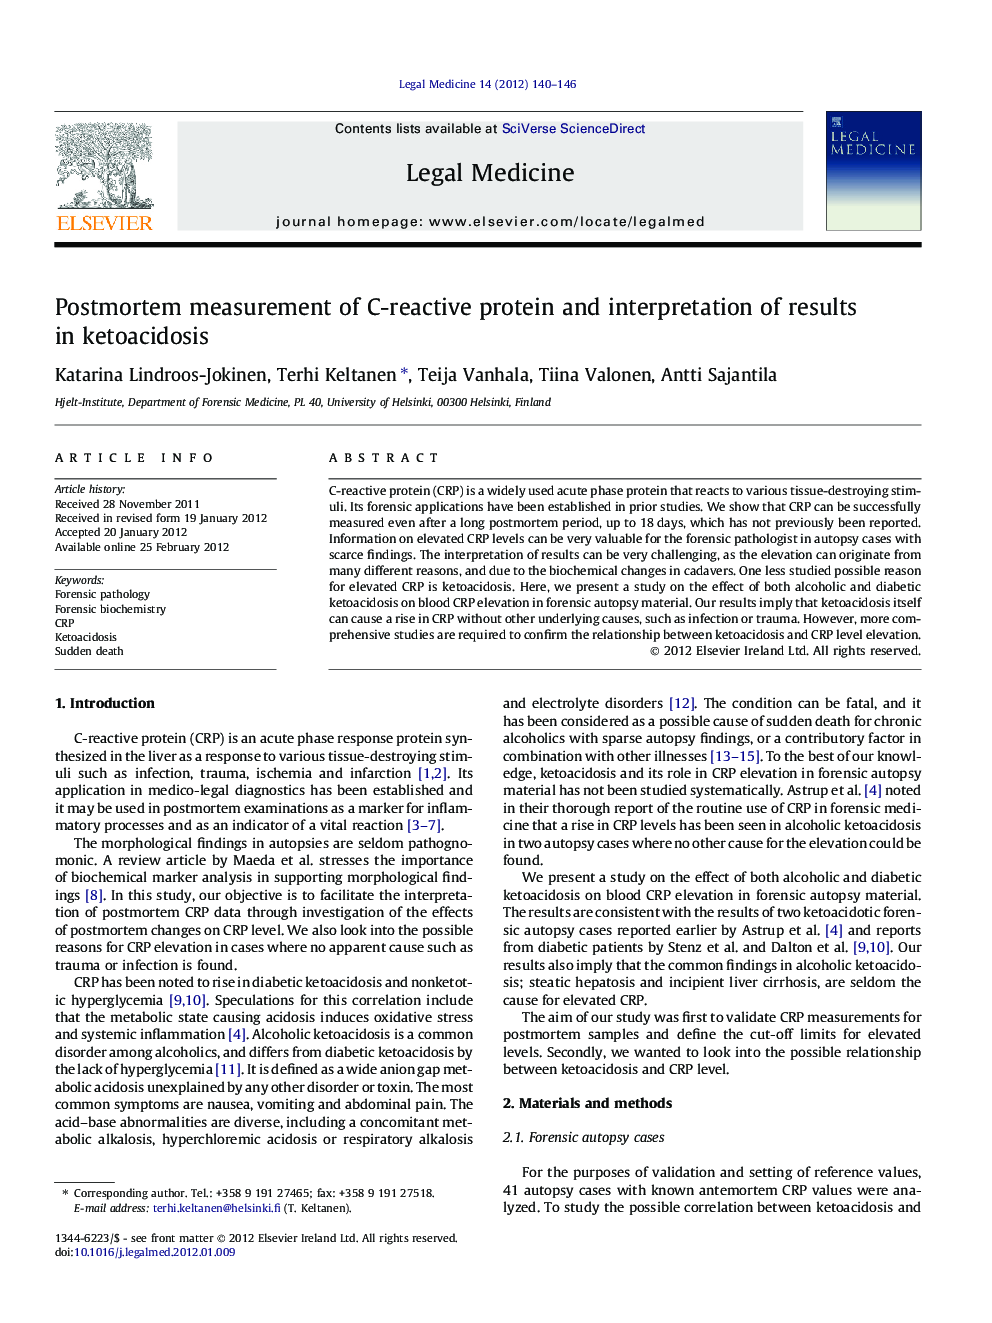 Postmortem measurement of C-reactive protein and interpretation of results in ketoacidosis